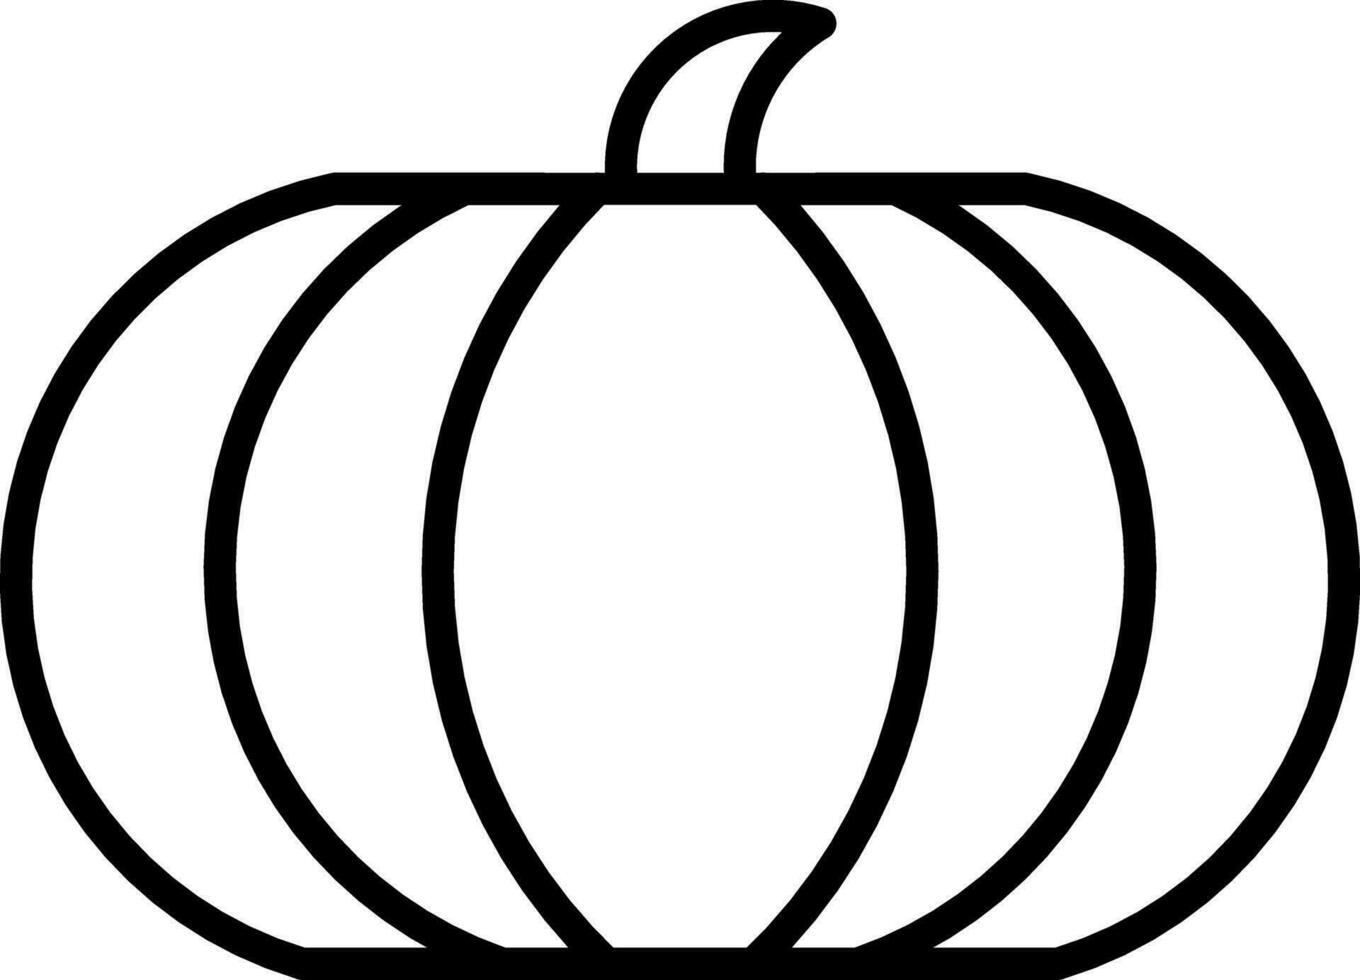 Minimalist silhouette of a pumpkin vector